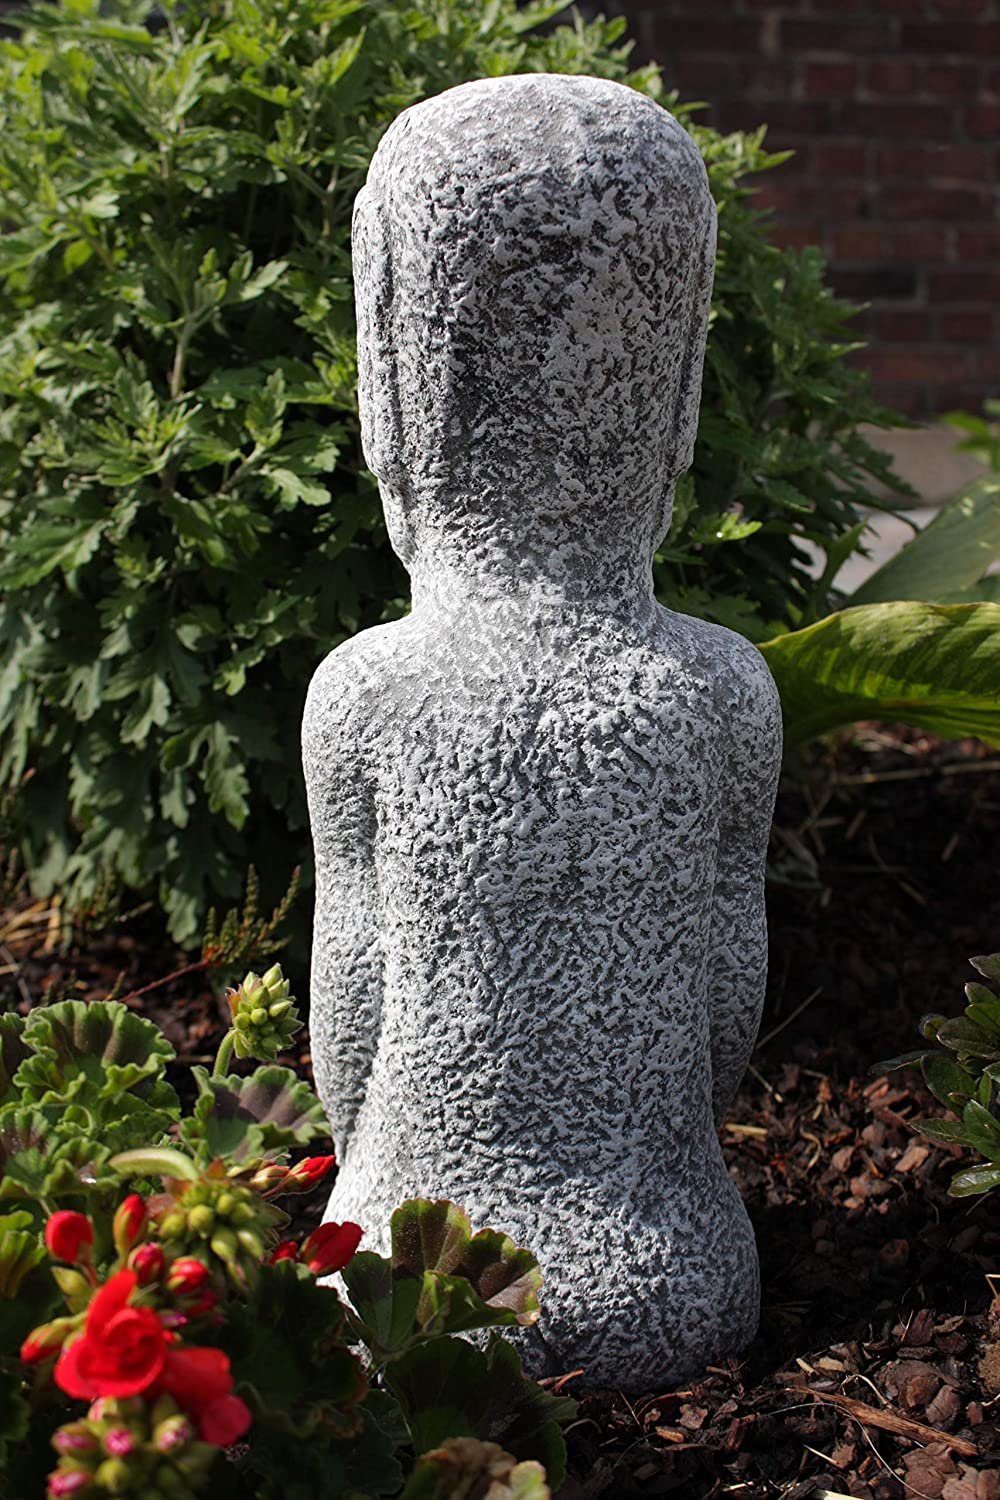 Stone Osterinsel Steinfigur Statue Gartenfigur and Style